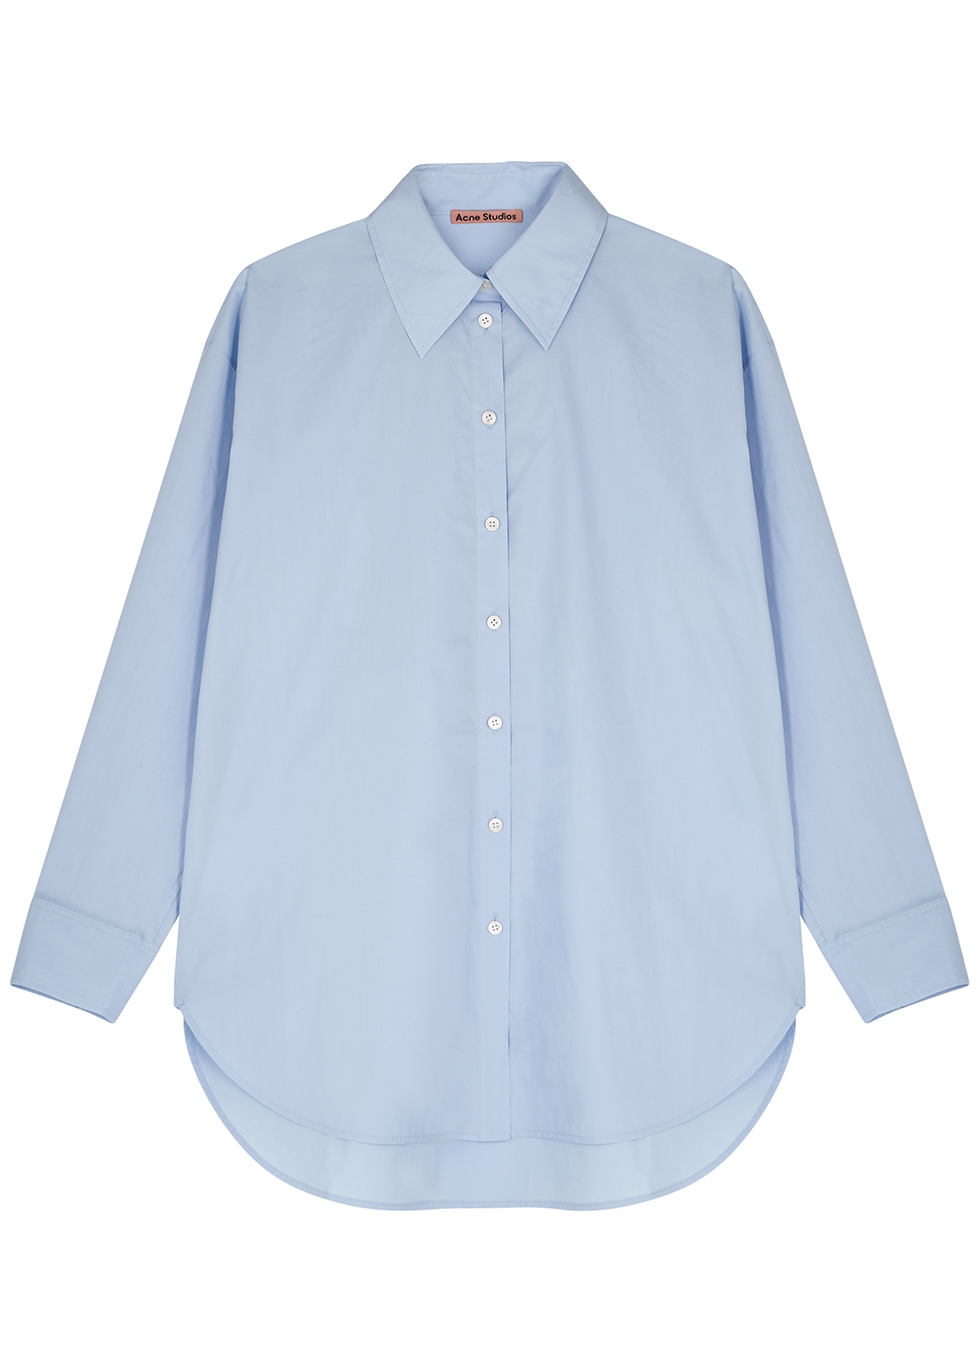 Acne Studios Stella light blue poplin shirt - Harvey Nichols